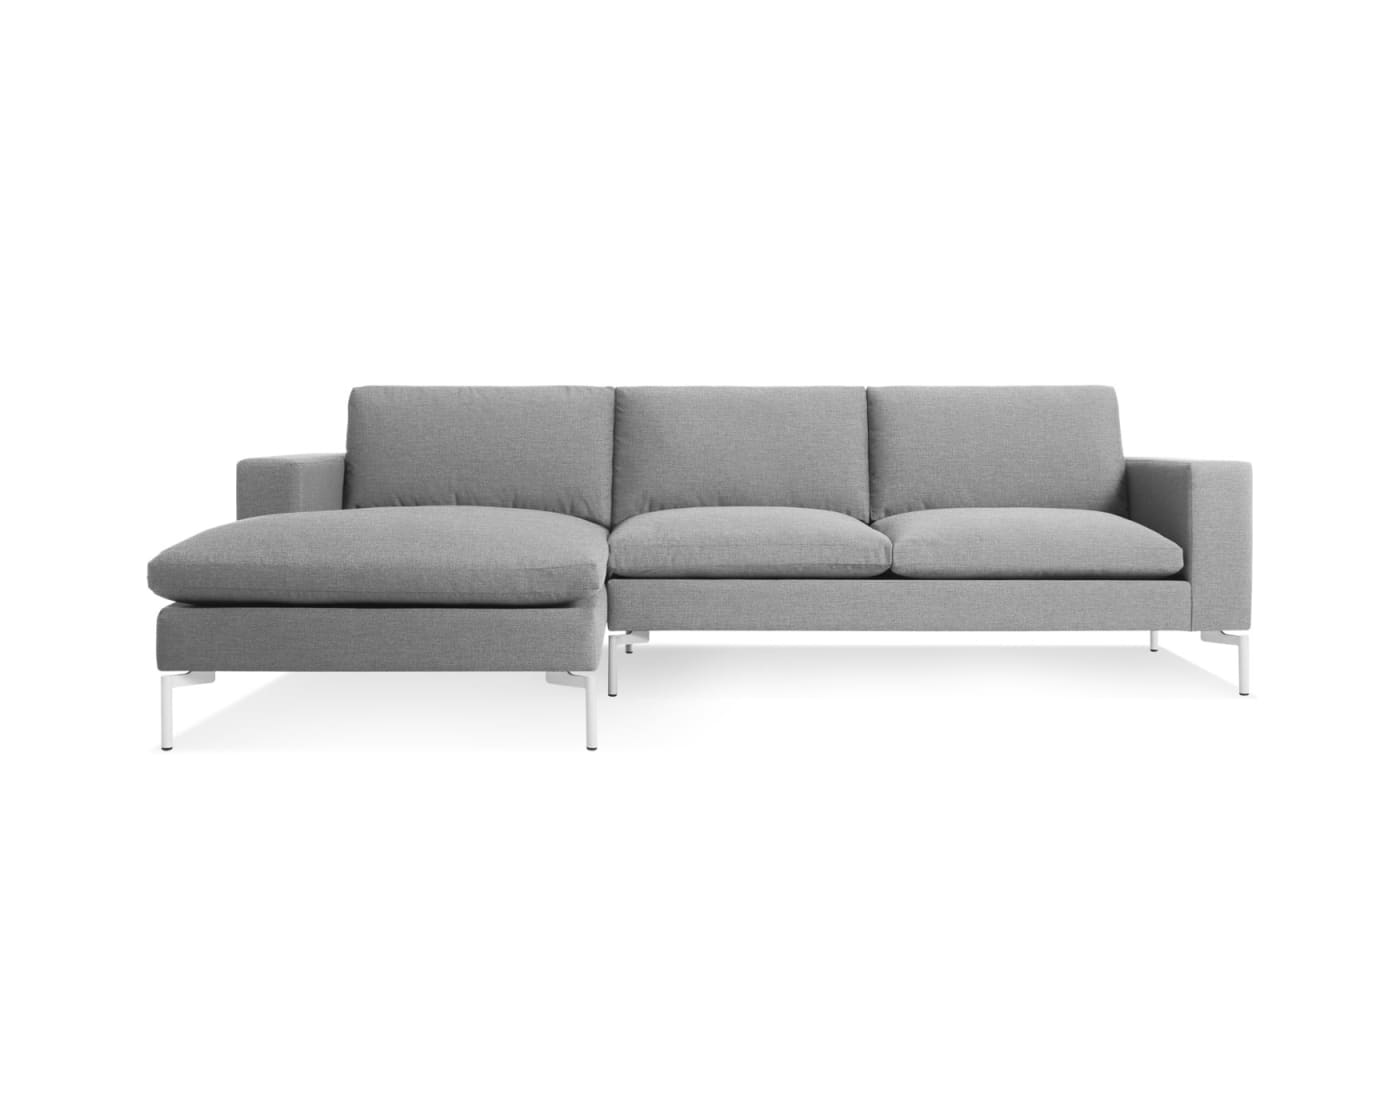 New Standard Sofa w/ Chaise